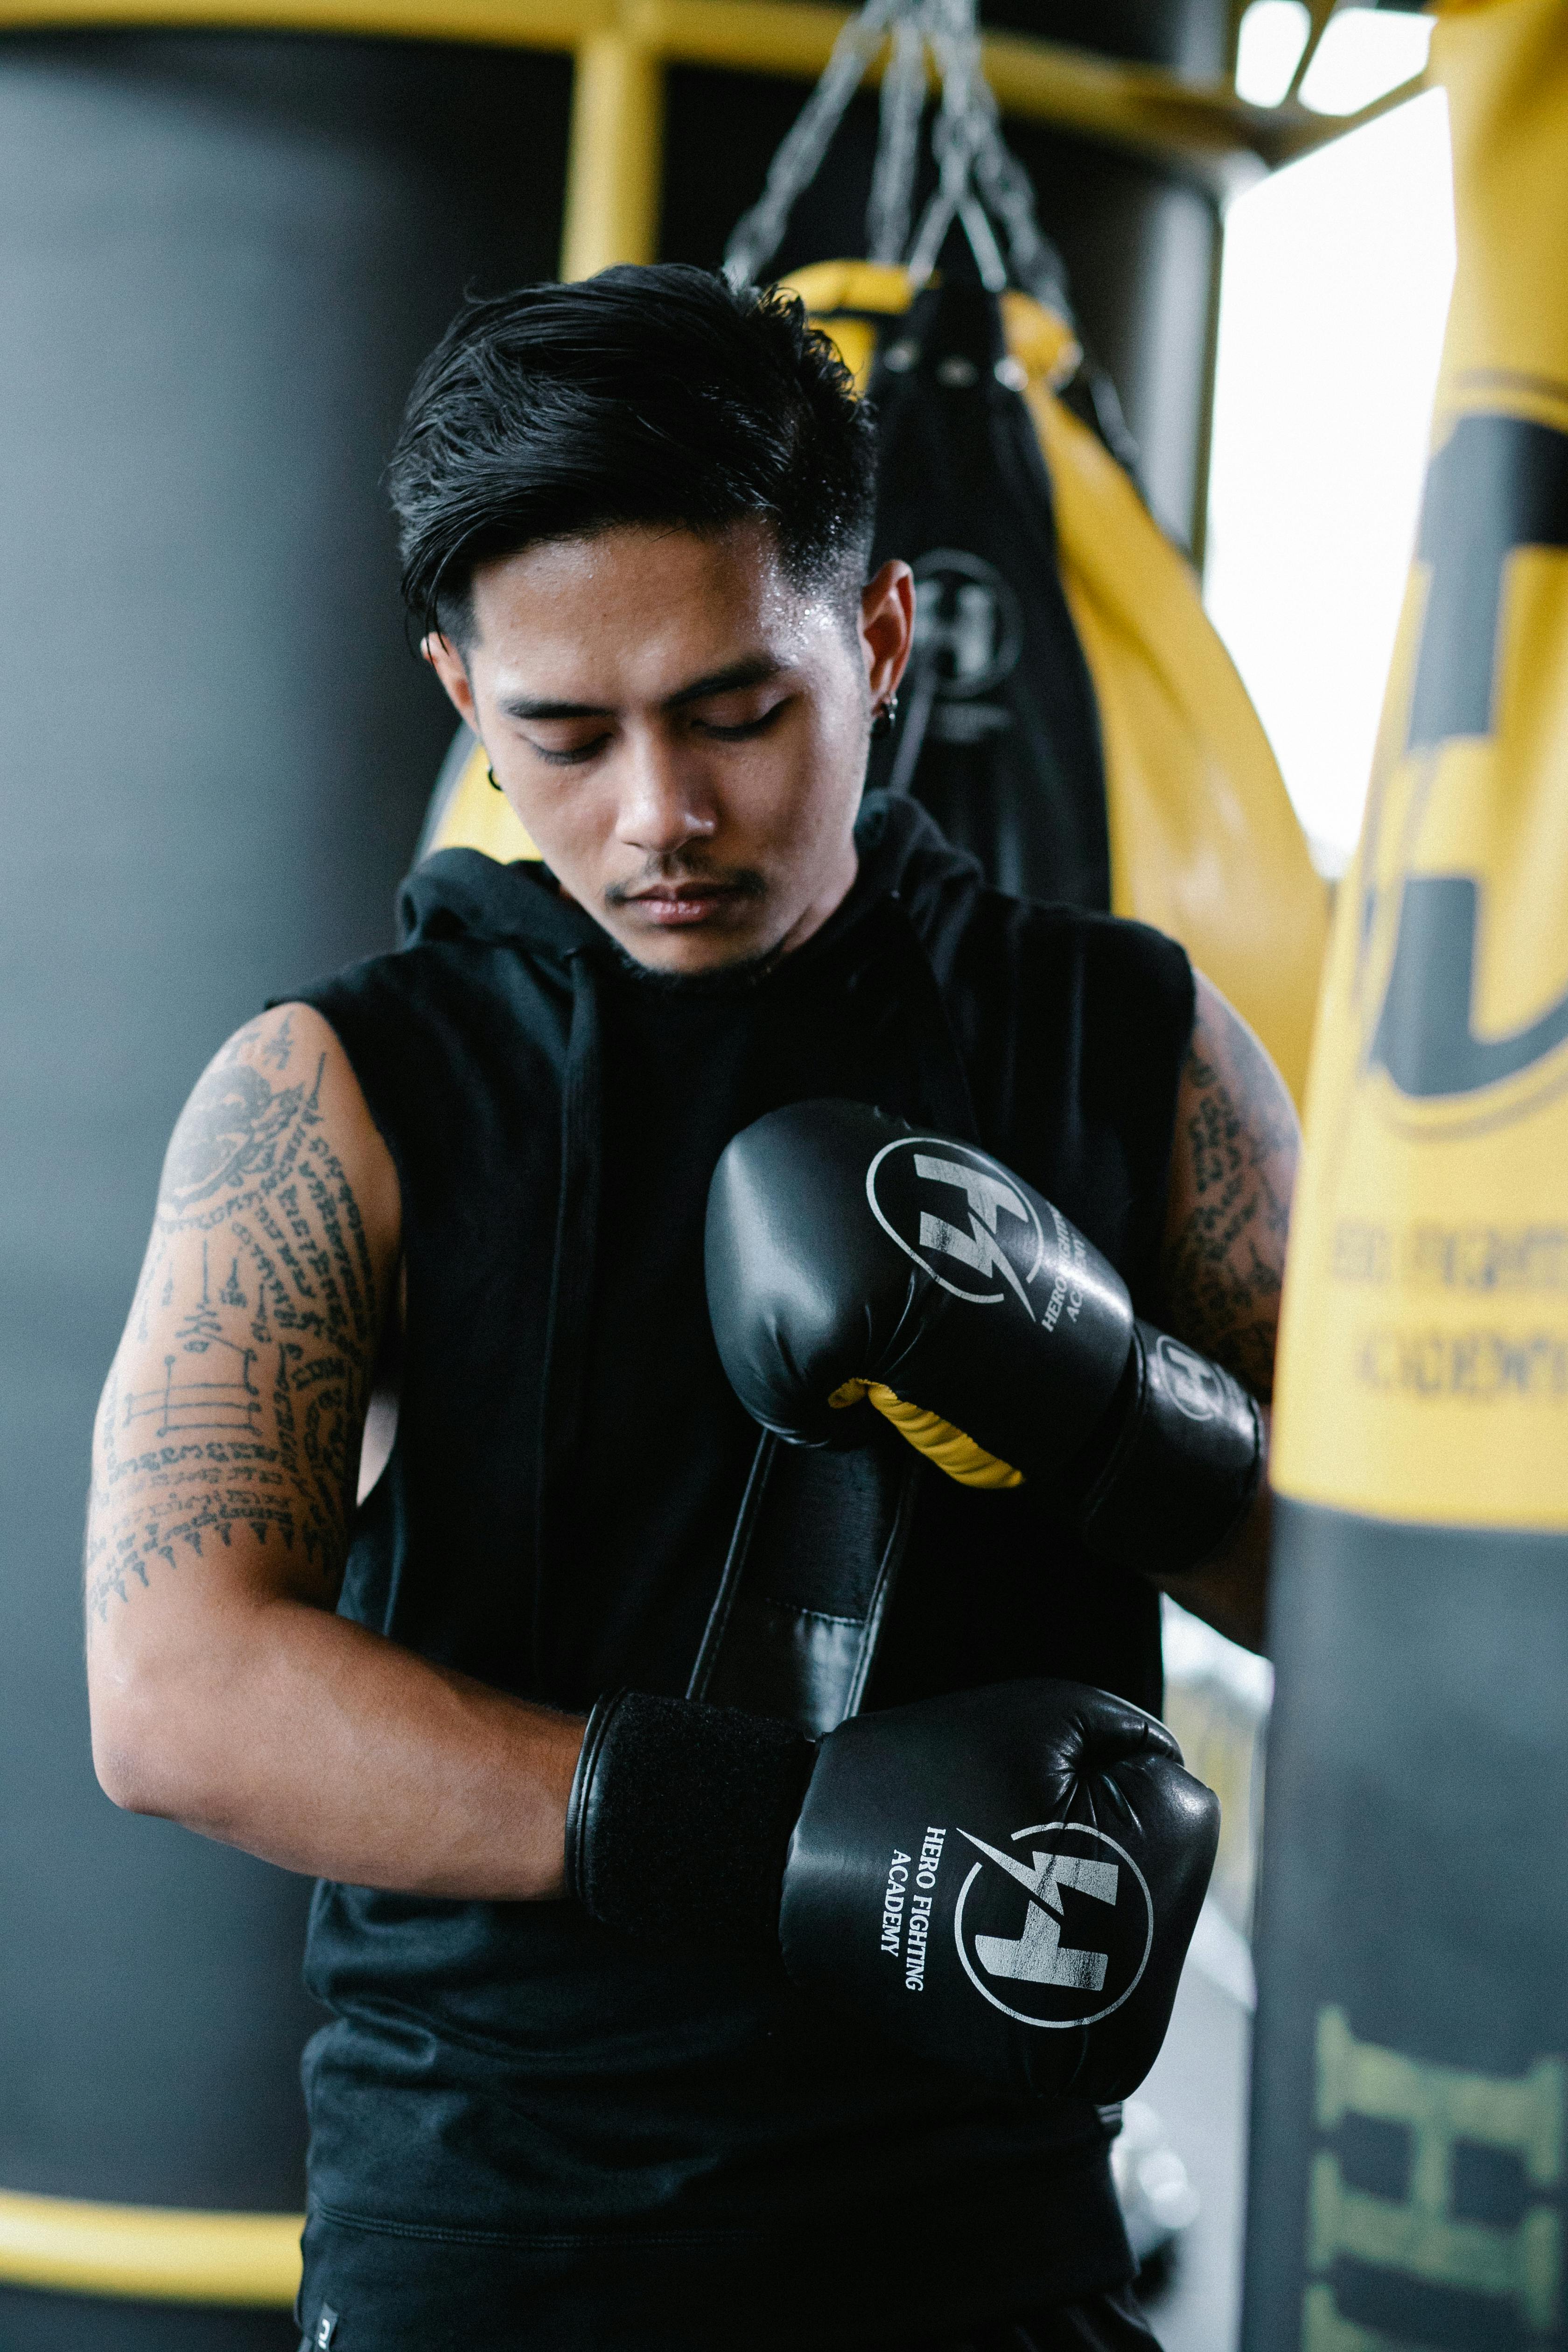 Ethnic boxer focusing while adjusting gloves · Free Stock Photo